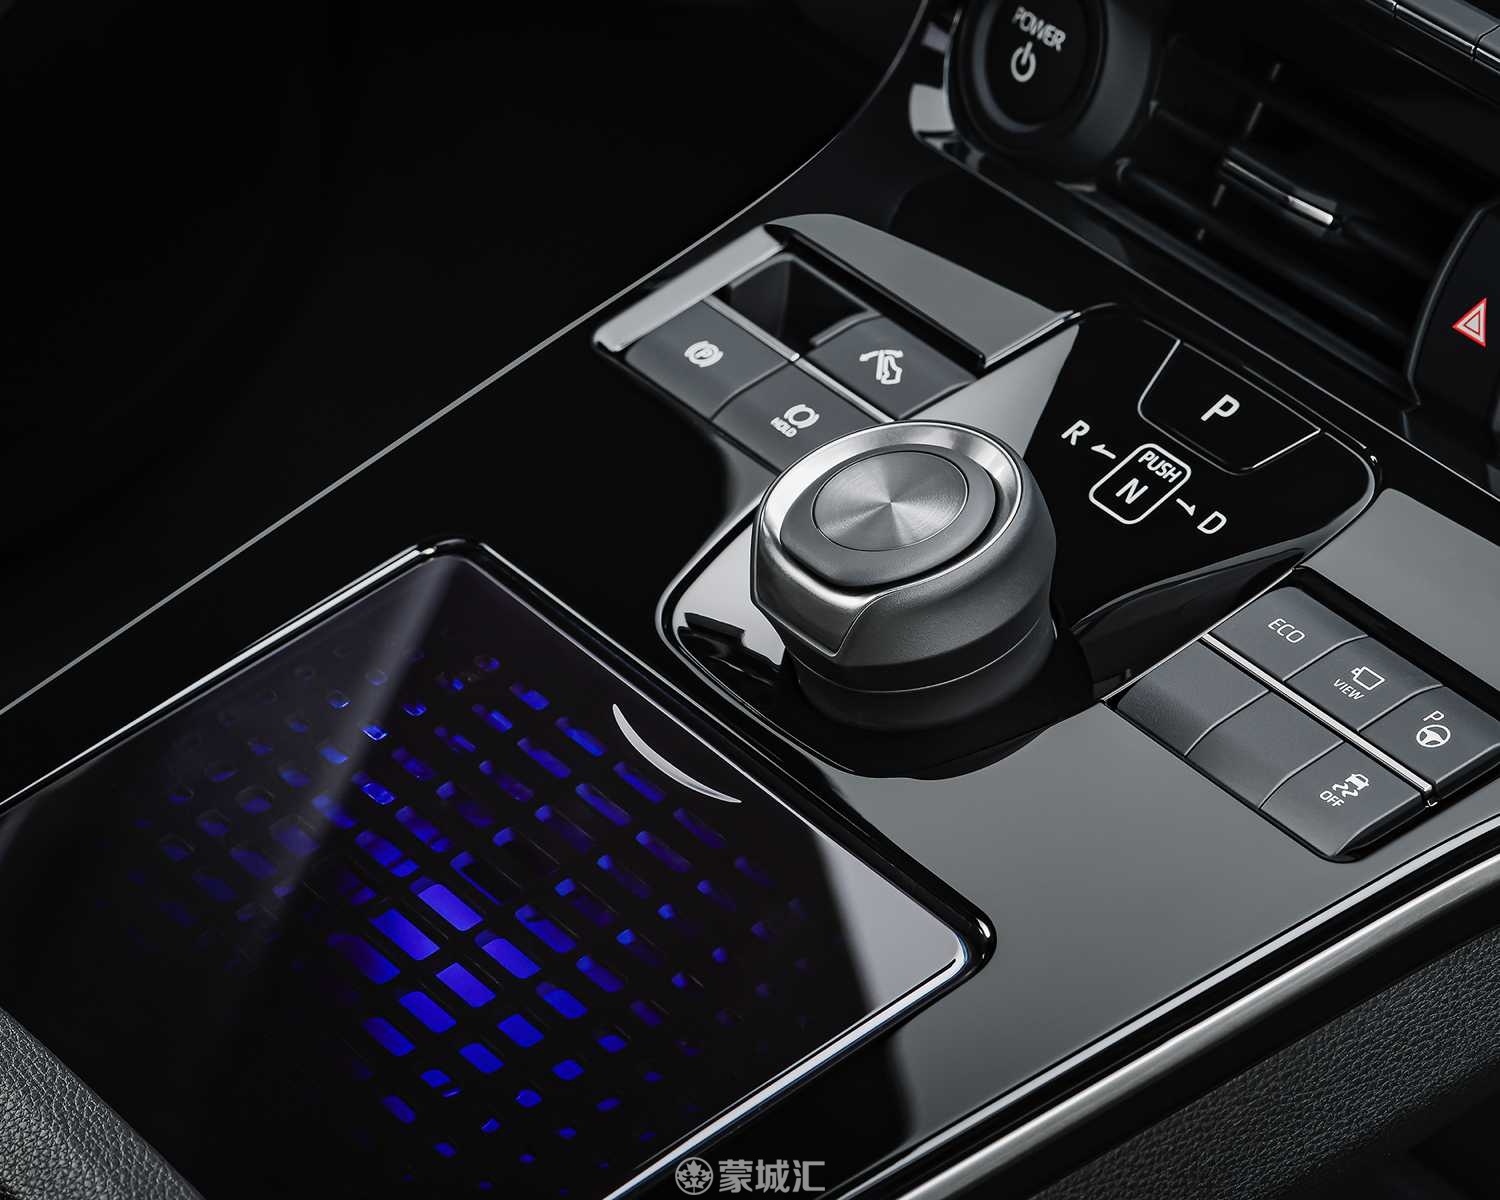 toyota-register-for-updates-bz4x-concept-interior-gear-shift-l.jpg